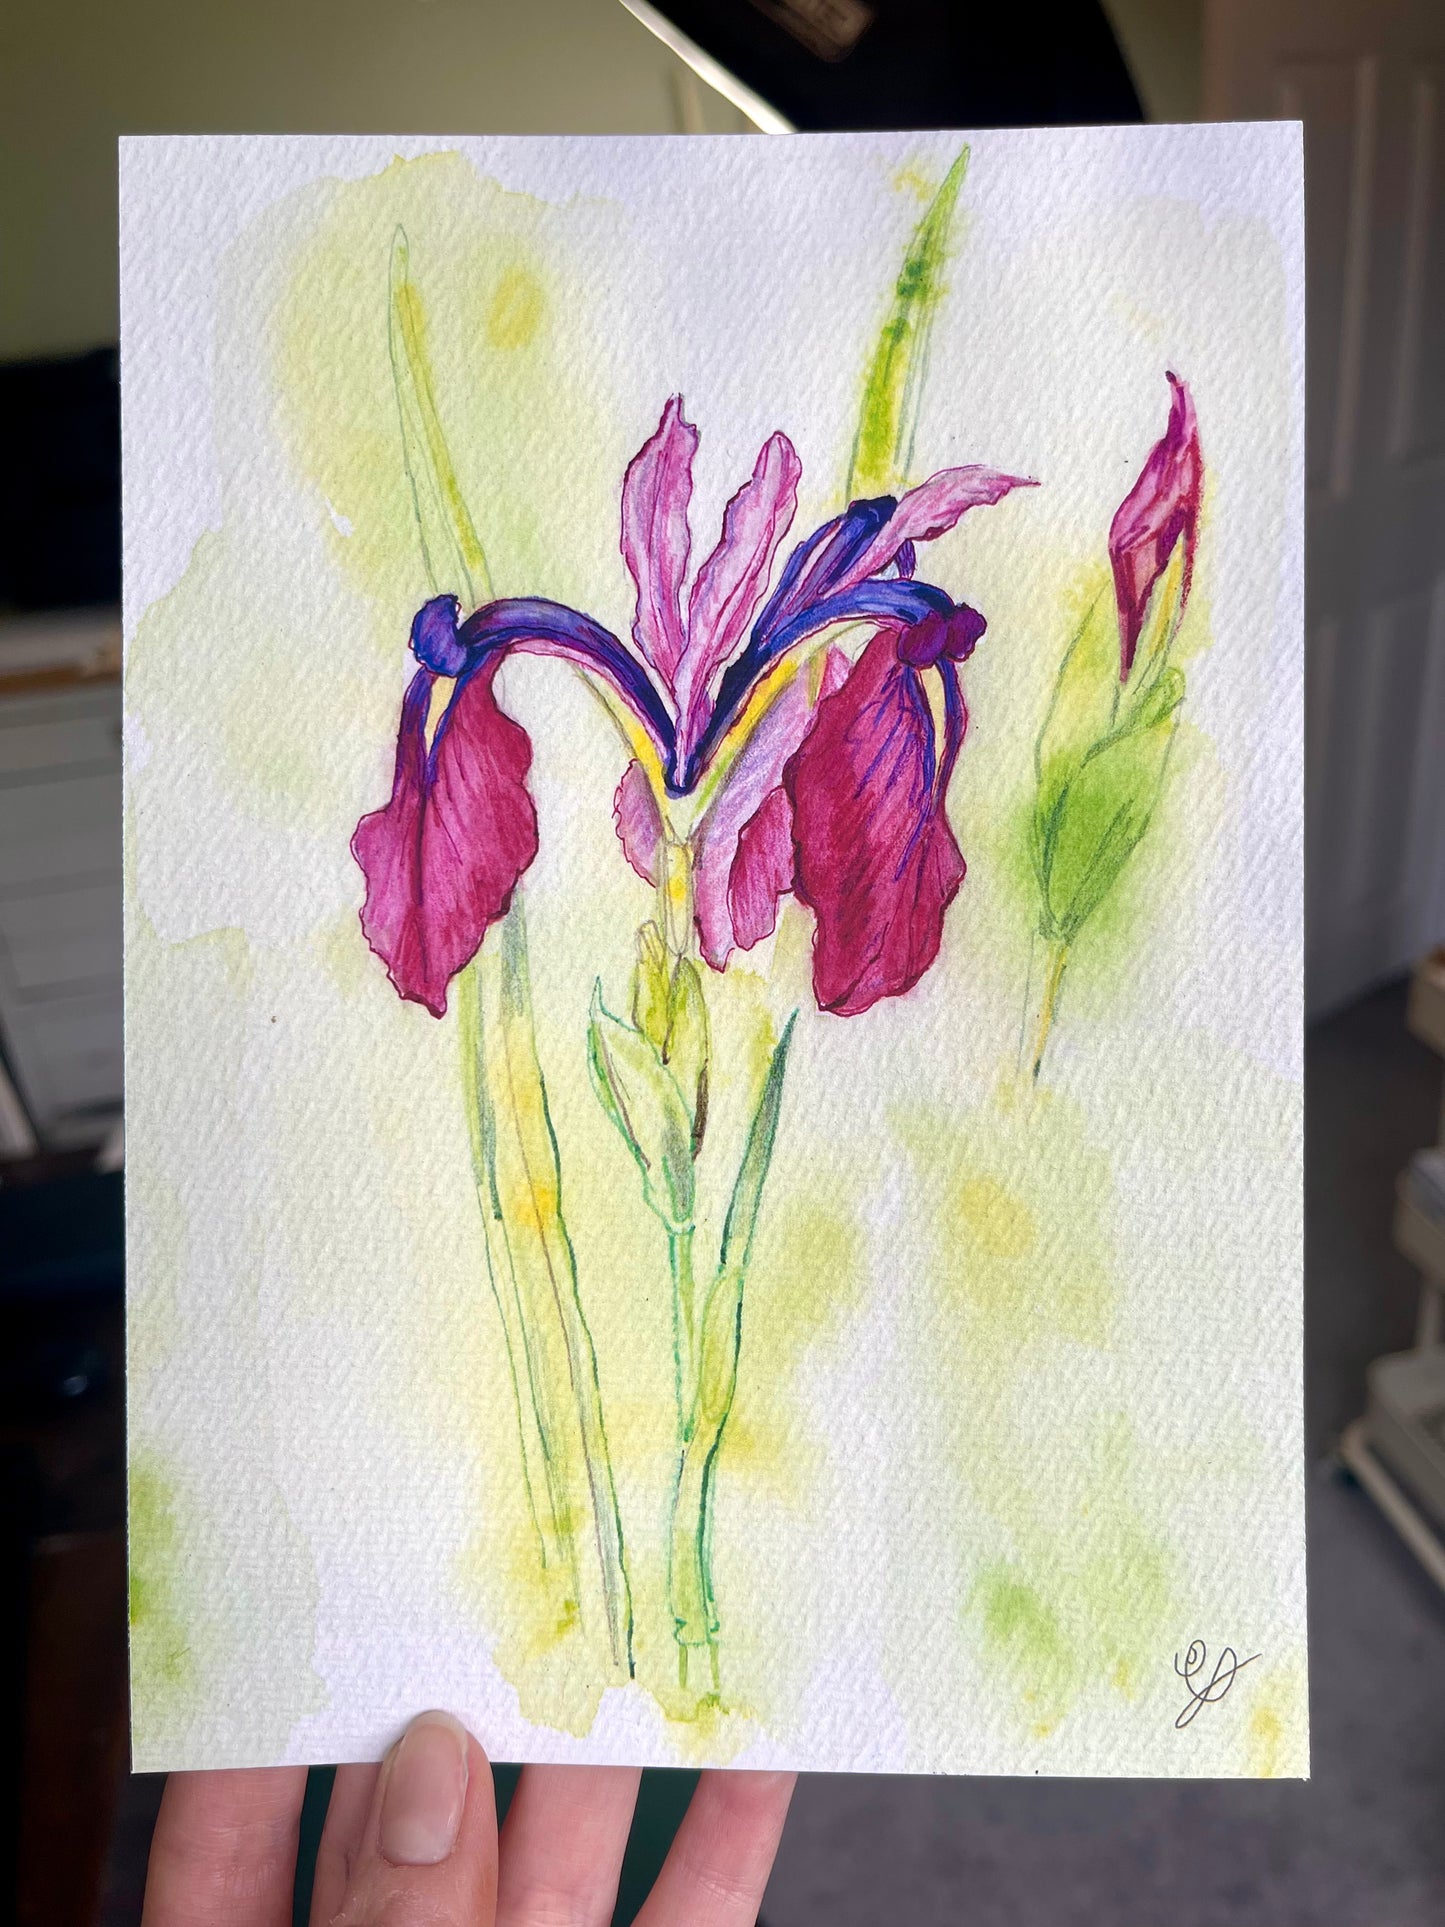 A vibrant print of a watercolour iris flower